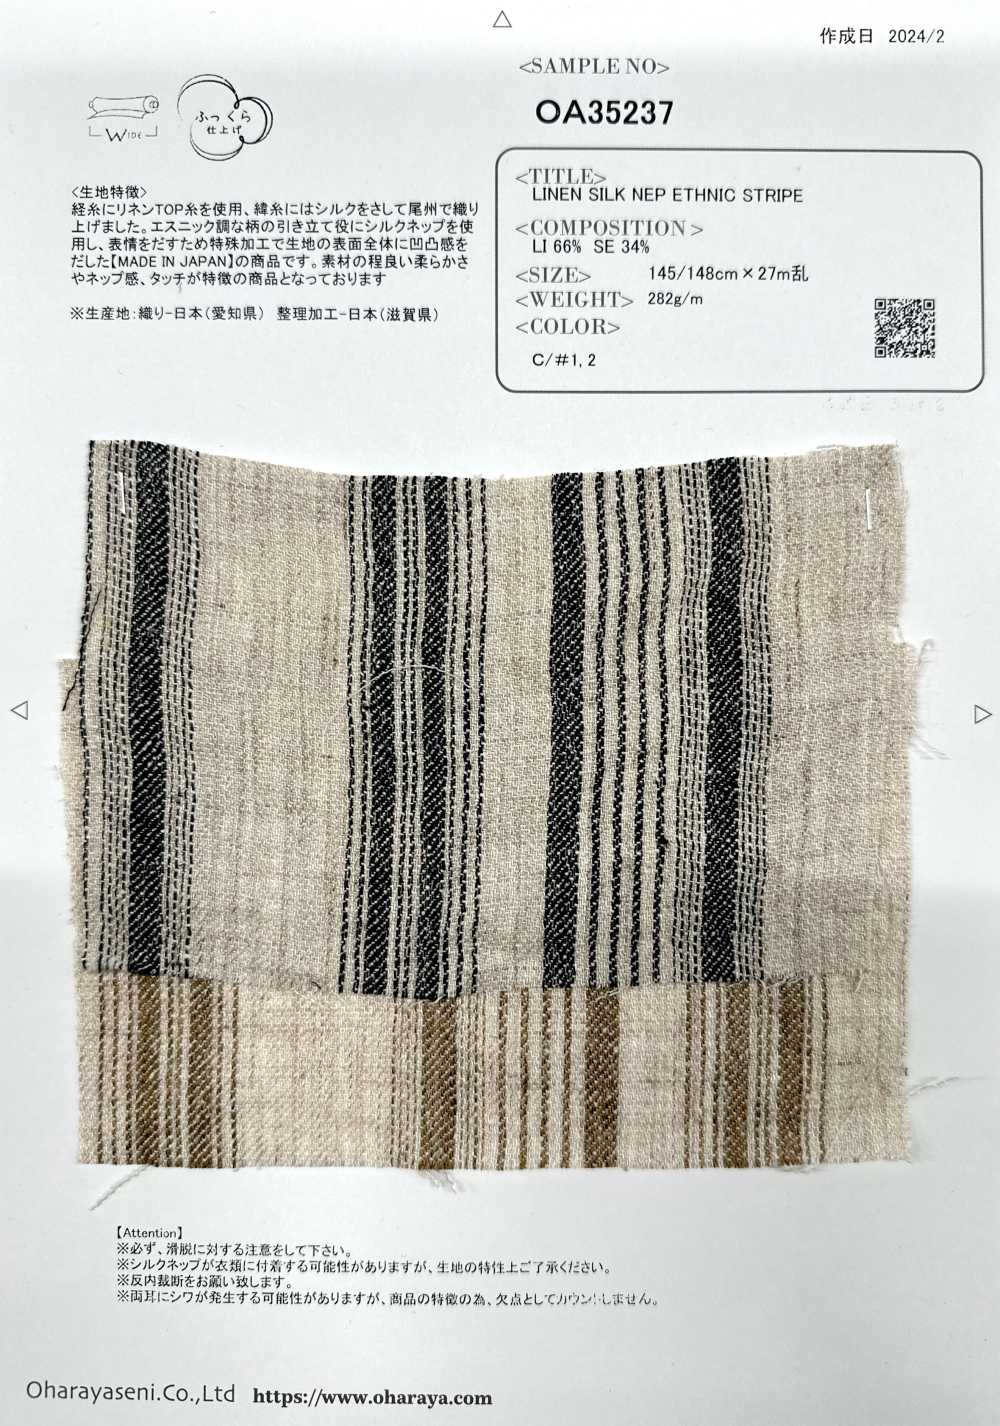 OA35237 Coton Supima & Lin Français × SOIE 2/1 Super Twill Finition Soyeuse[Fabrication De Textile] Oharayaseni